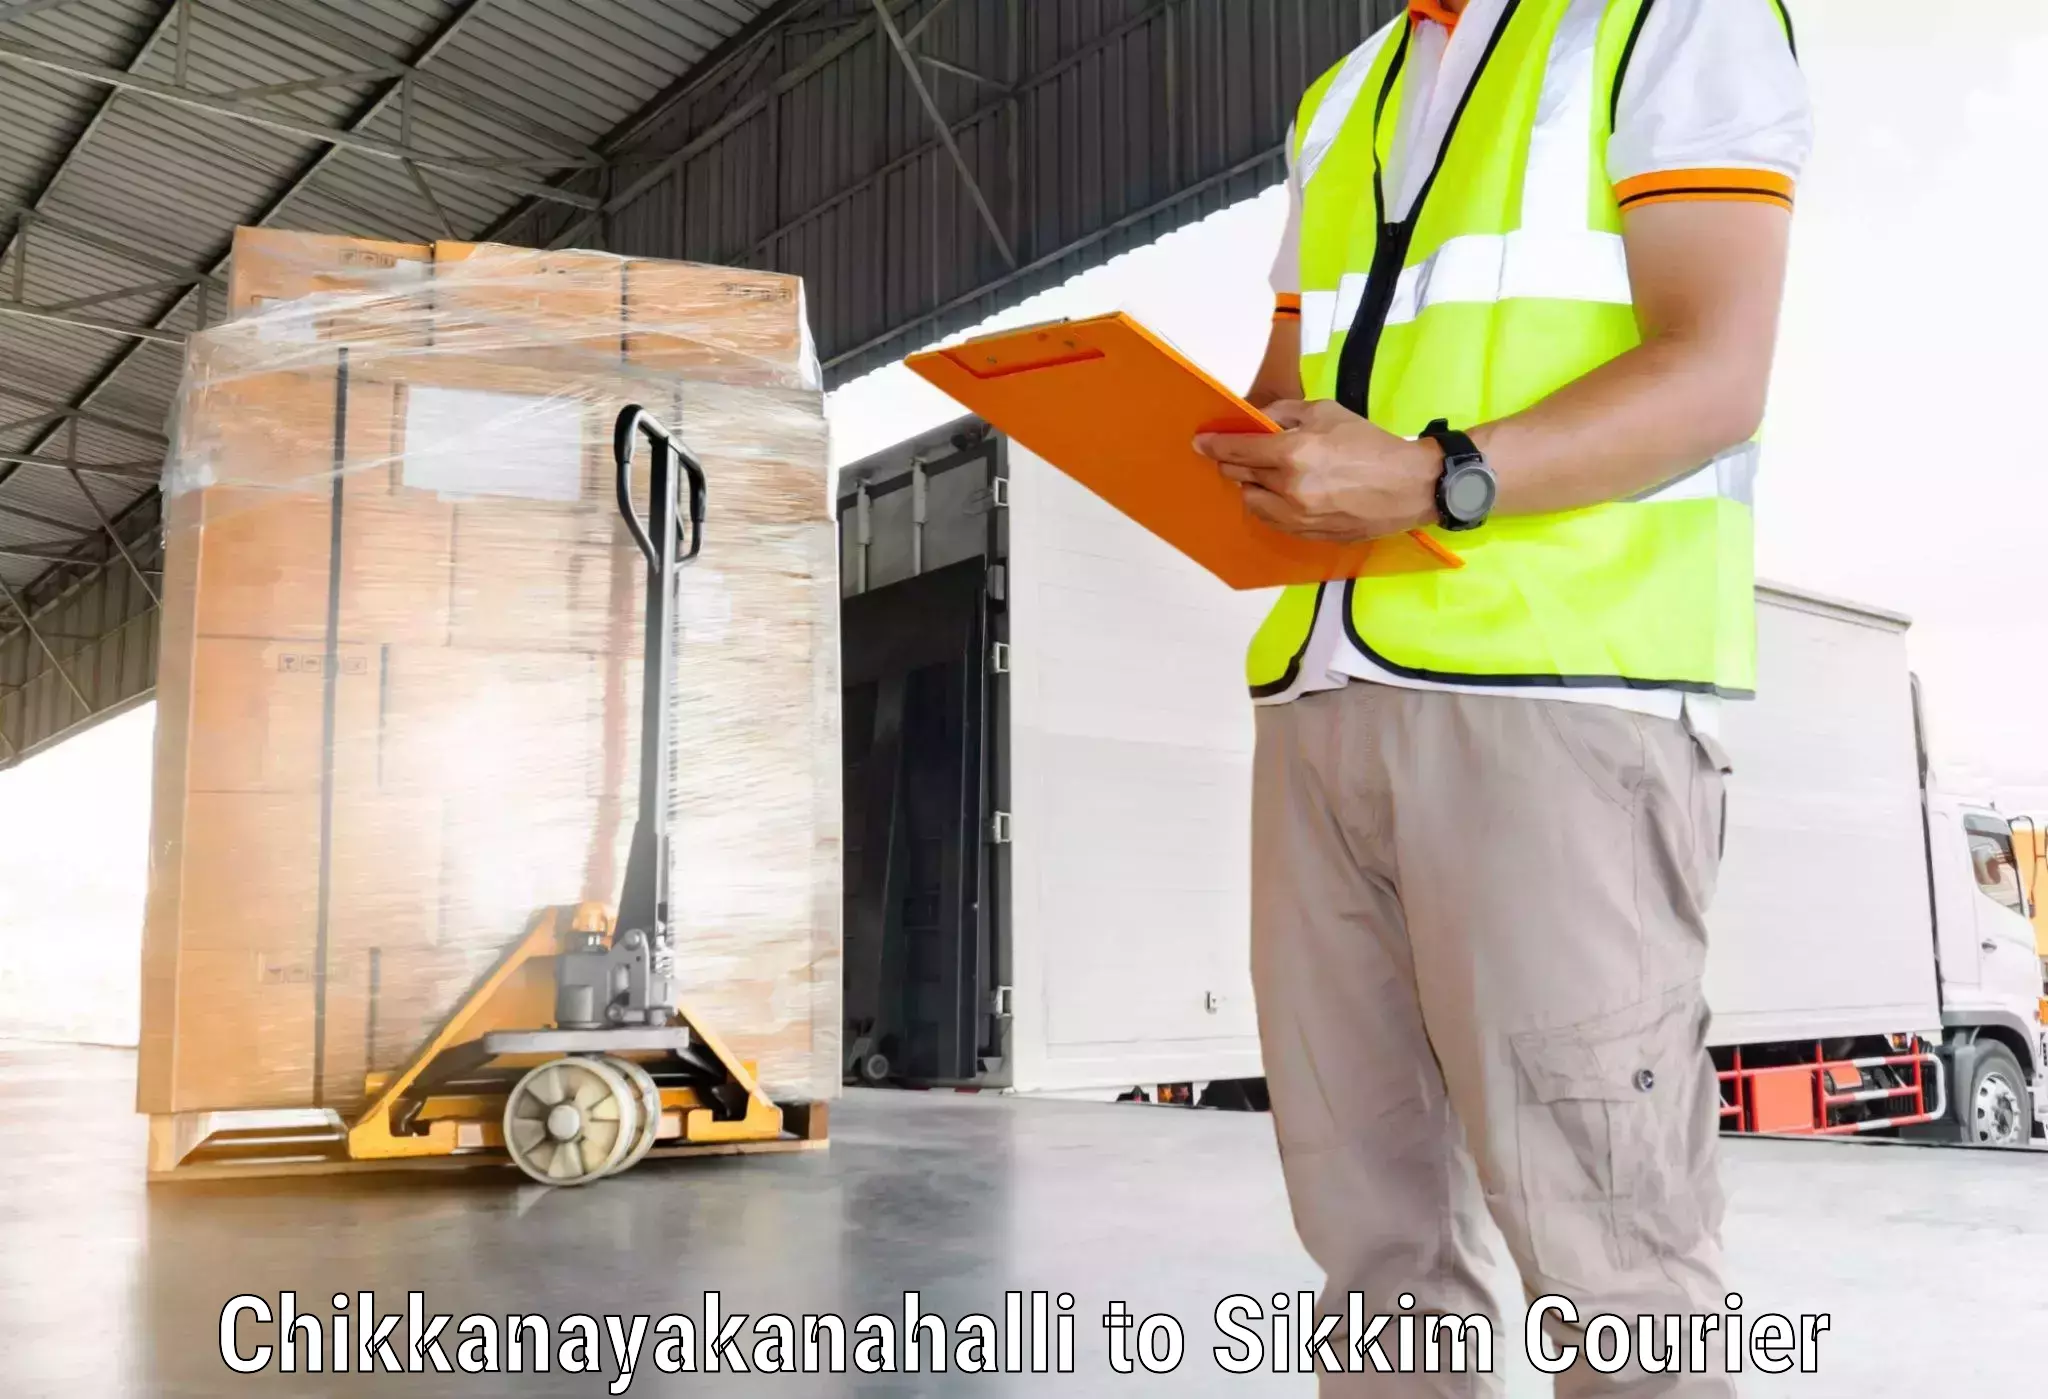 High-capacity parcel service Chikkanayakanahalli to Pelling